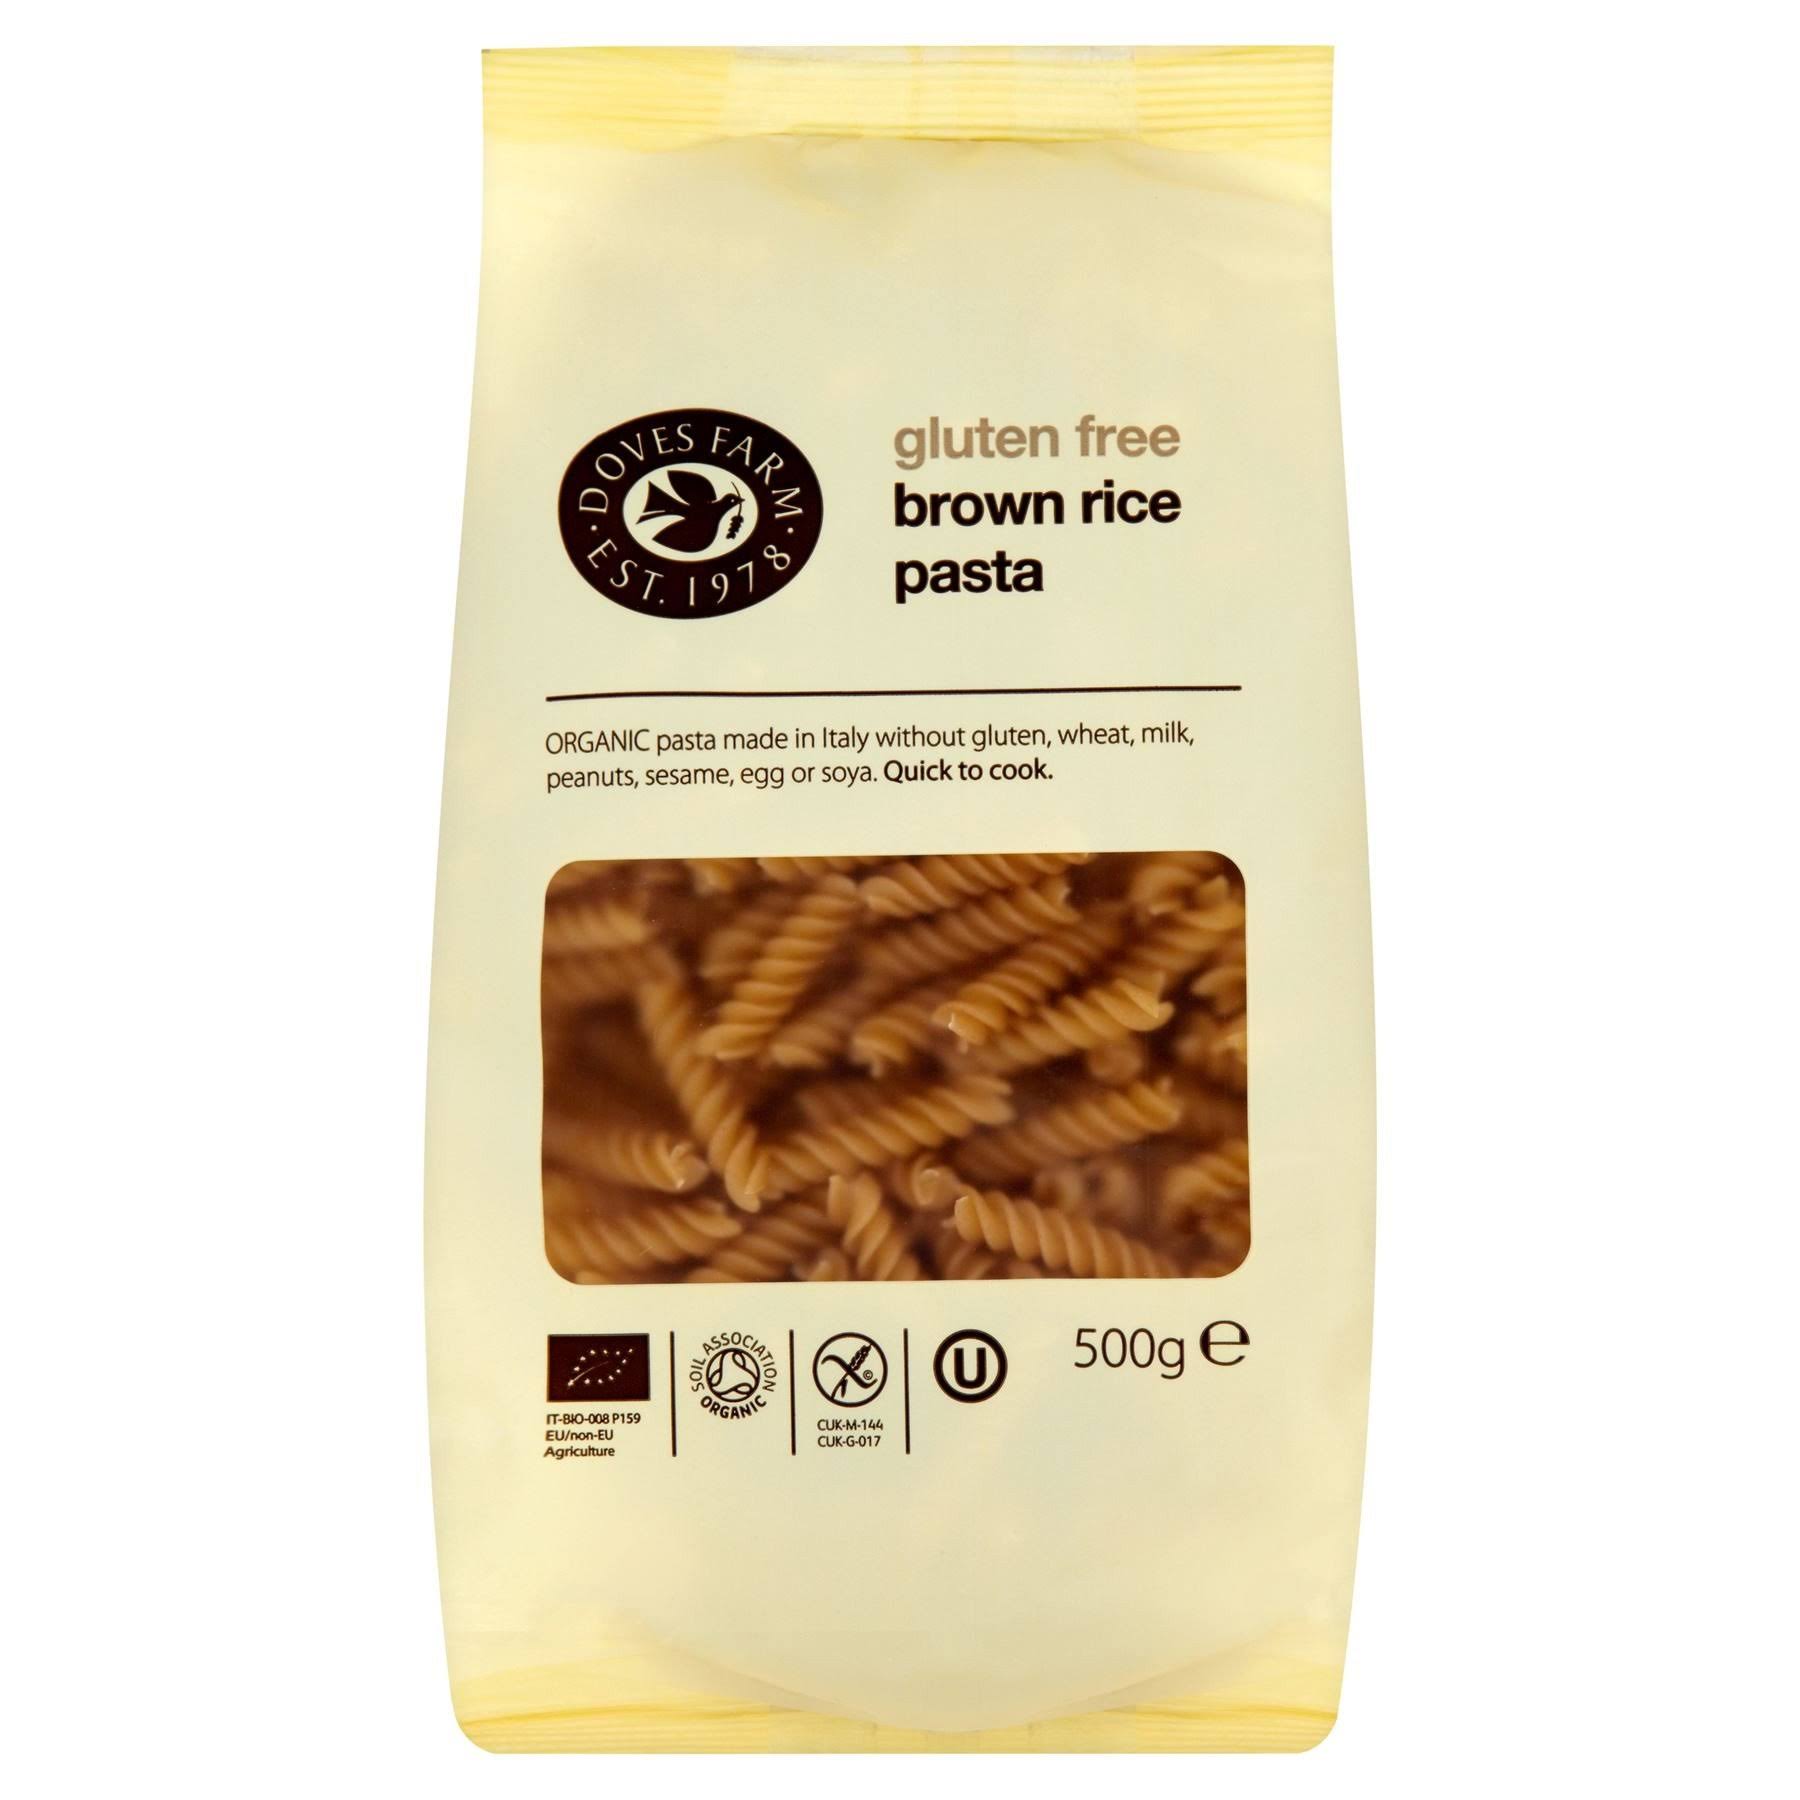 Doves Farm Organic Brown Rice Pasta - 500g, Gluten Free